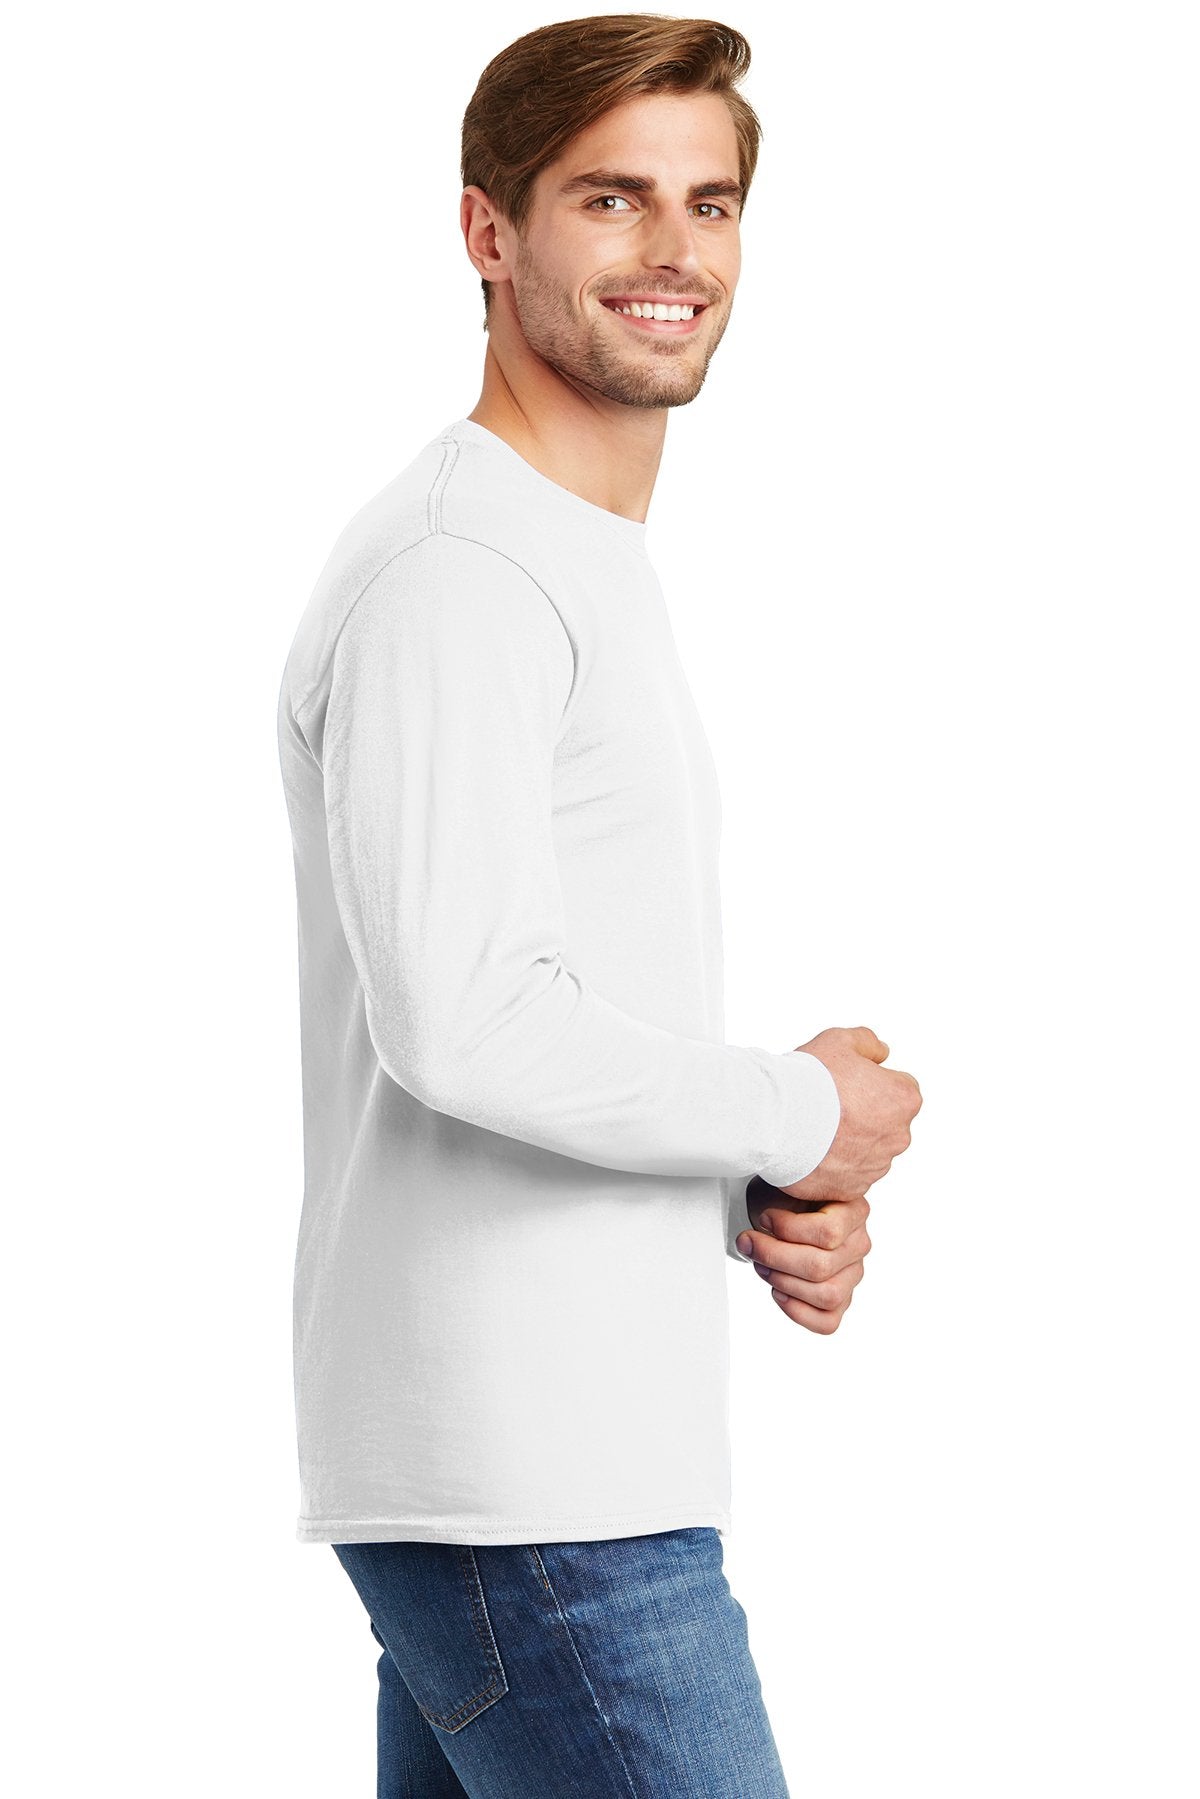 hanes tagless cotton long sleeve t shirt 5586 white